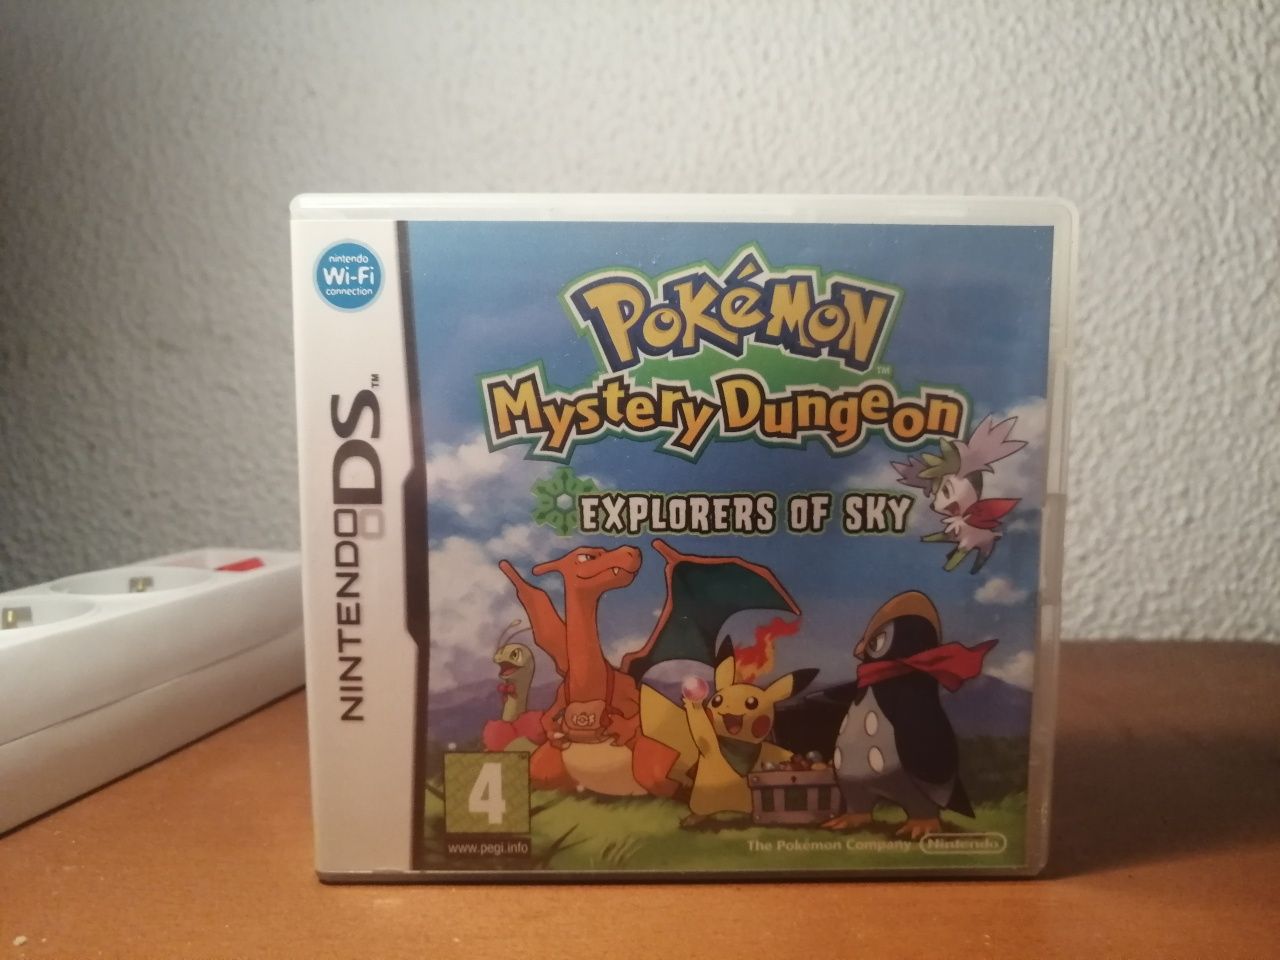 Pokémon Mystery Dungeon Explorers of Sky